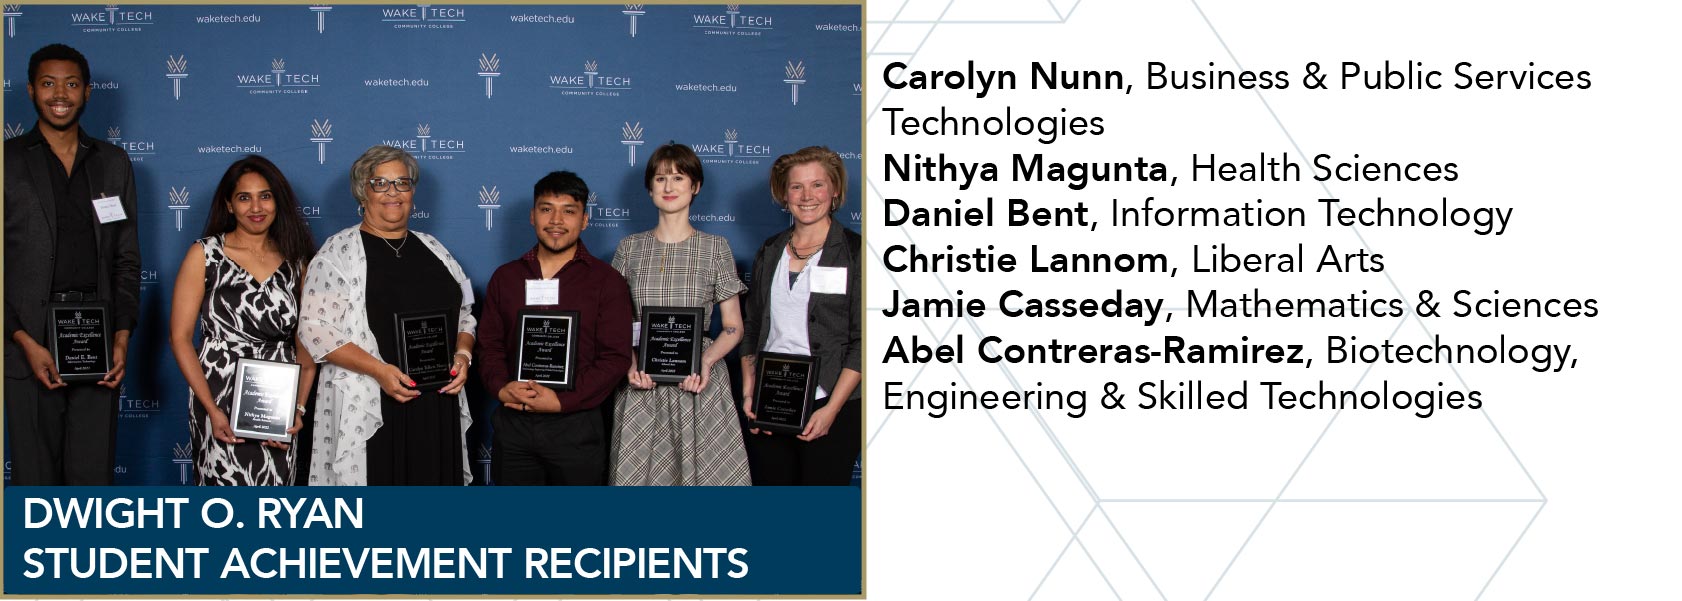 Wake Tech Excellence Awards - Student Achievement Recipients